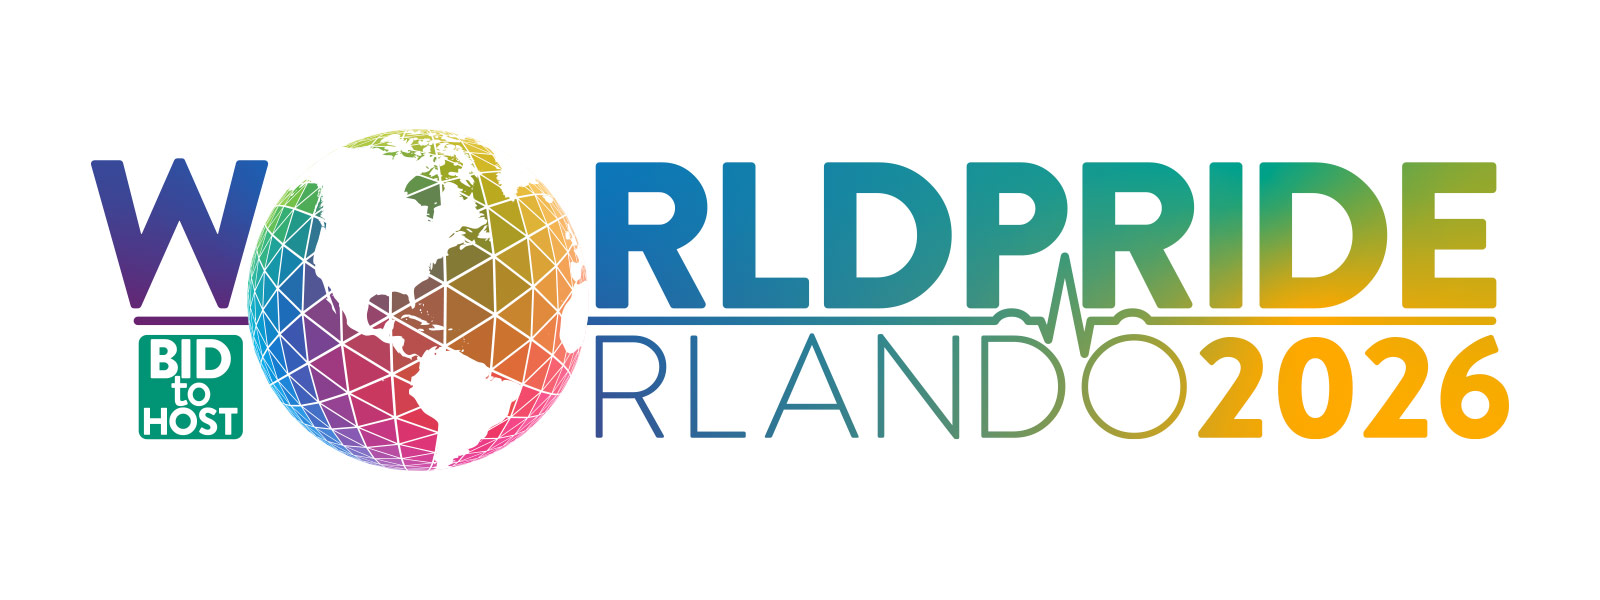 Bid to Host WorldPride Orlando 2026